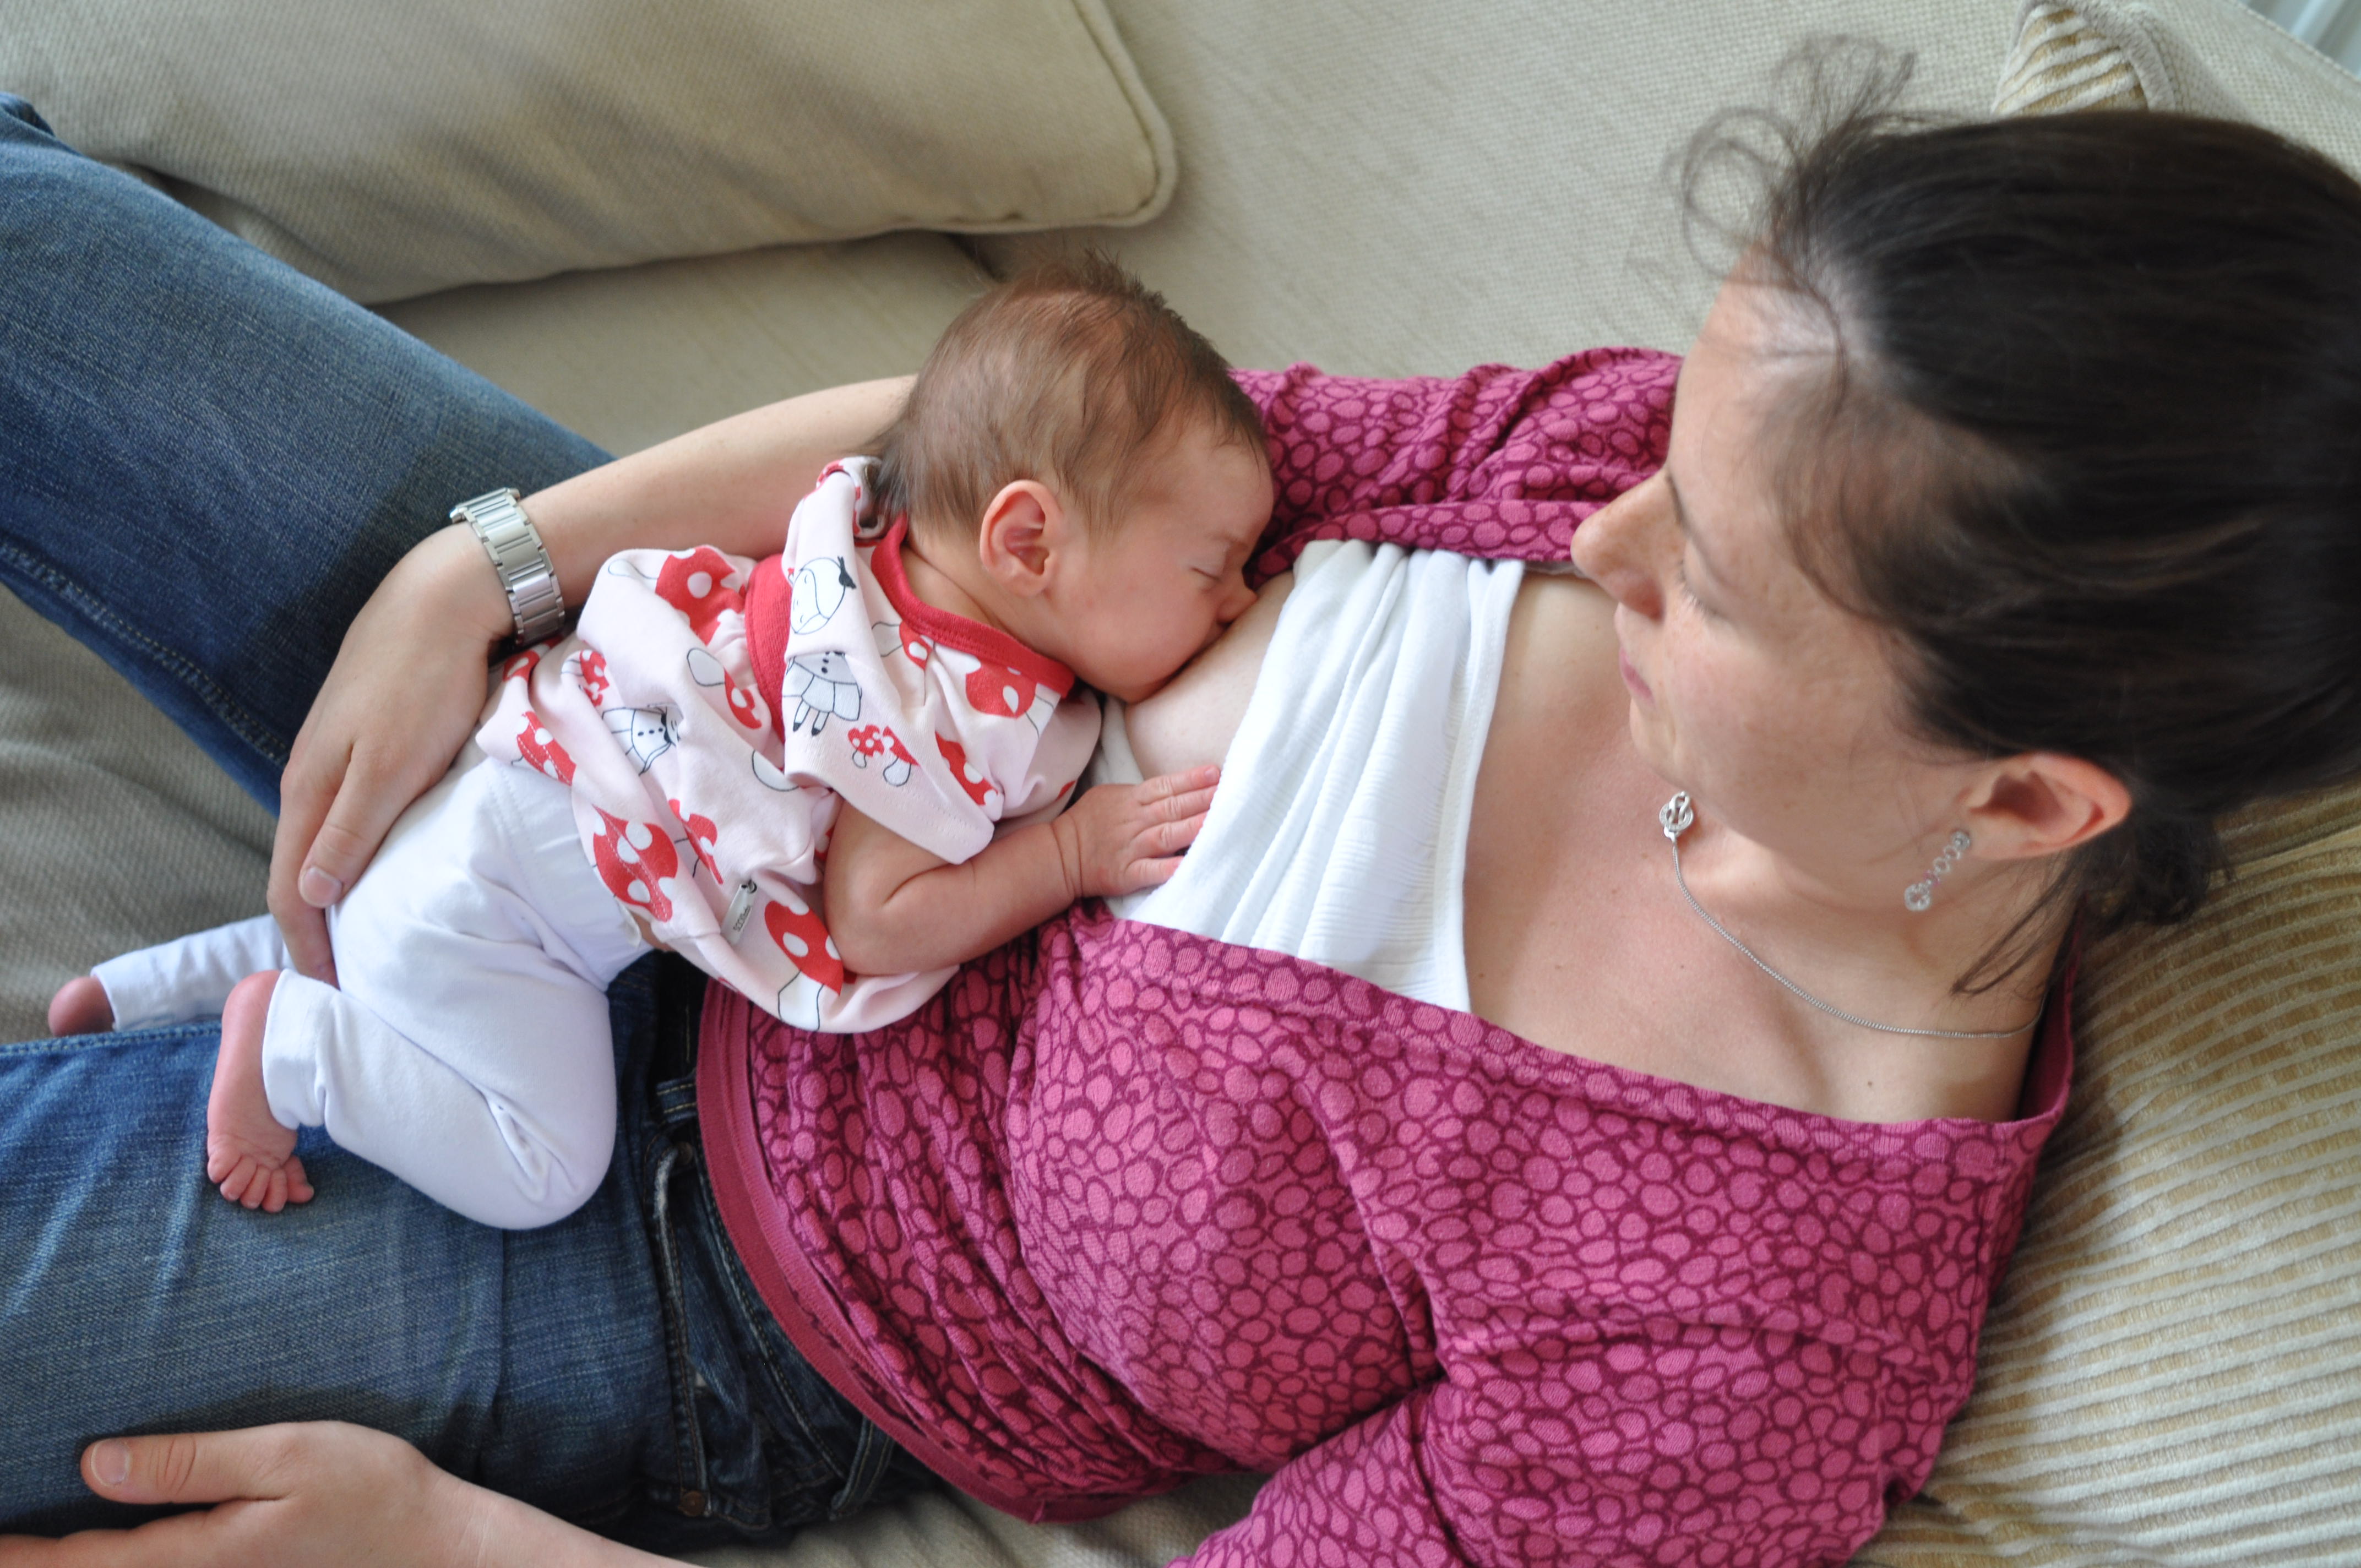 Slide show: Breastfeeding positions - Mayo Clinic